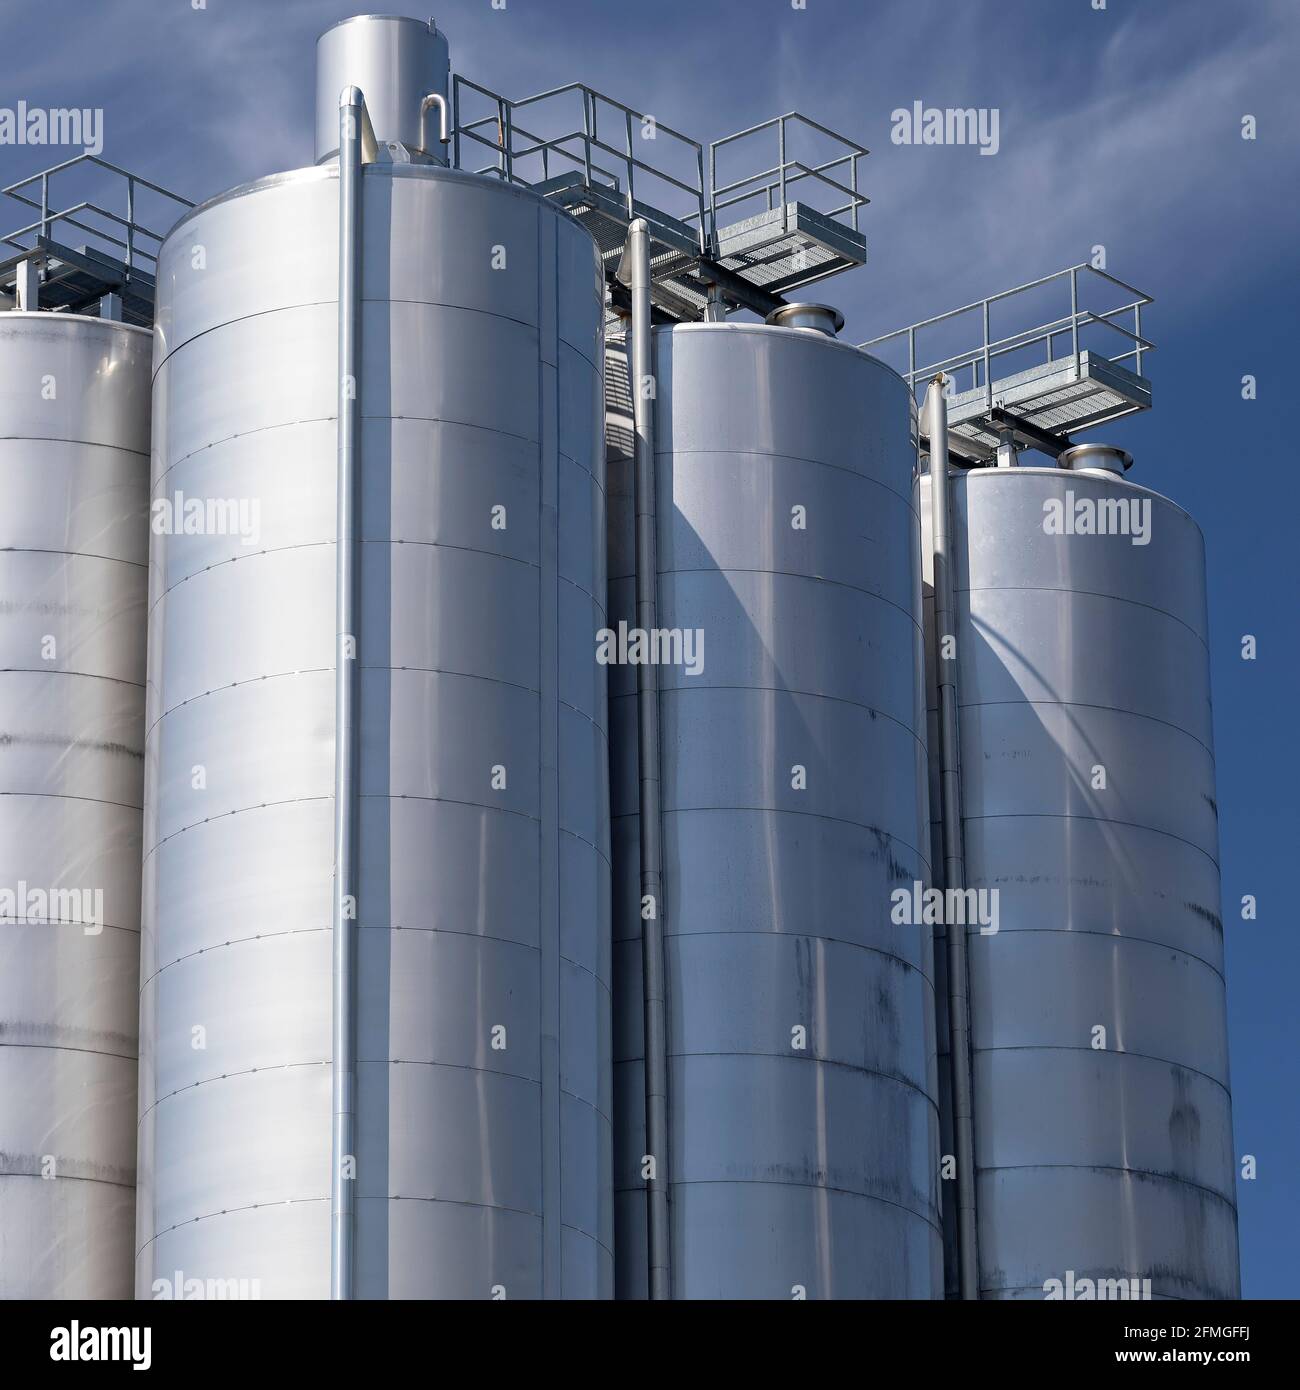 Industrial stainless steel storage tanks. Ontario Canada Stock Photo